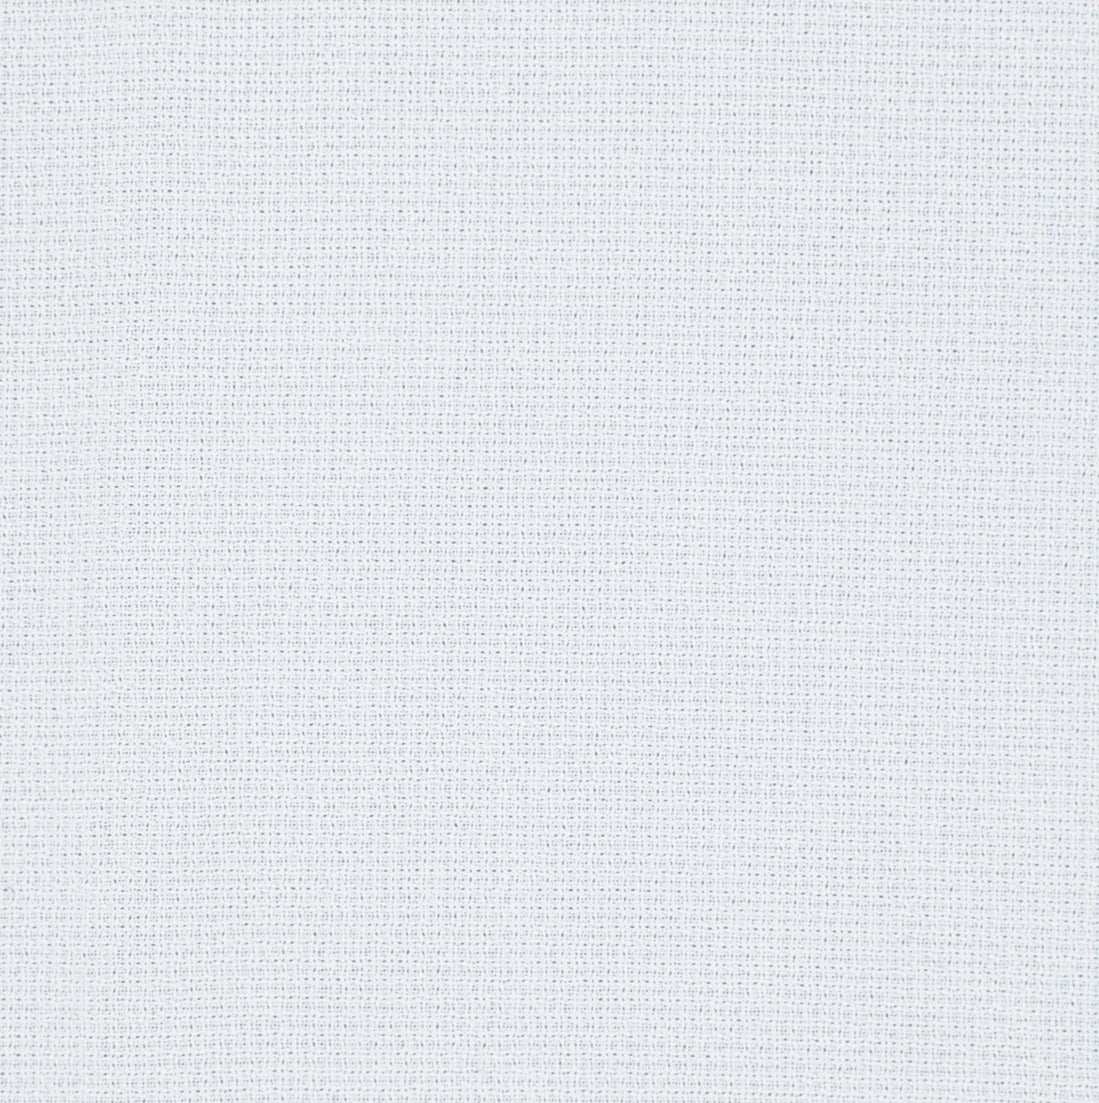 36002-01 White Polyester Crepe Plain Dyed 100% 210g/yd 54&quot; plain dyed polyester white woven Solid Color - knit fabric - woven fabric - fabric company - fabric wholesale - fabric b2b - fabric factory - high quality fabric - hong kong fabric - fabric hk - acetate fabric - cotton fabric - linen fabric - metallic fabric - nylon fabric - polyester fabric - spandex fabric - chun wing hing - cwh hk - fabric worldwide ship - 針織布 - 梳織布 - 布料公司- 布料批發 - 香港布料 - 秦榮興